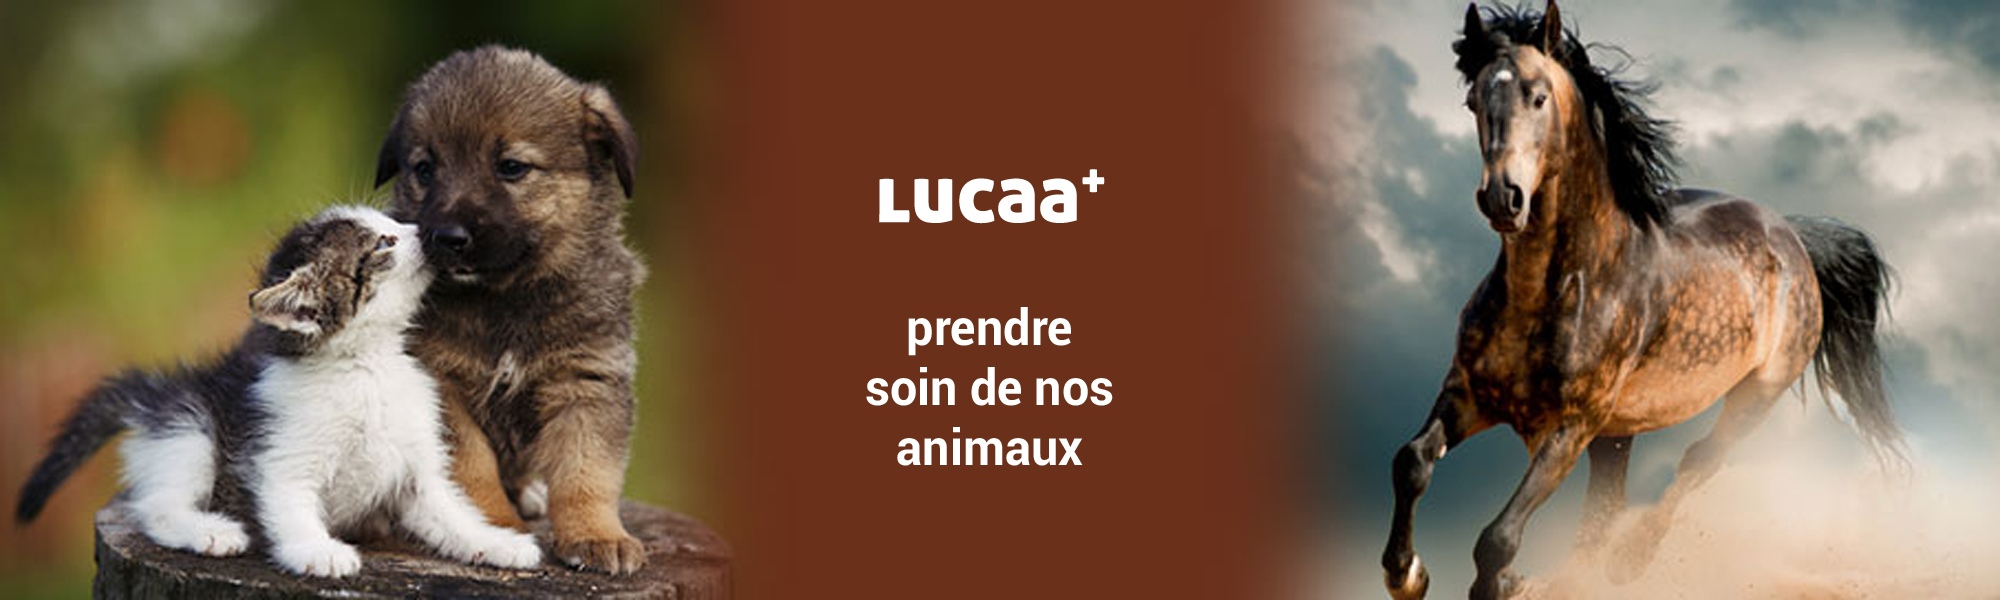 LUCAA+ pour les animaux